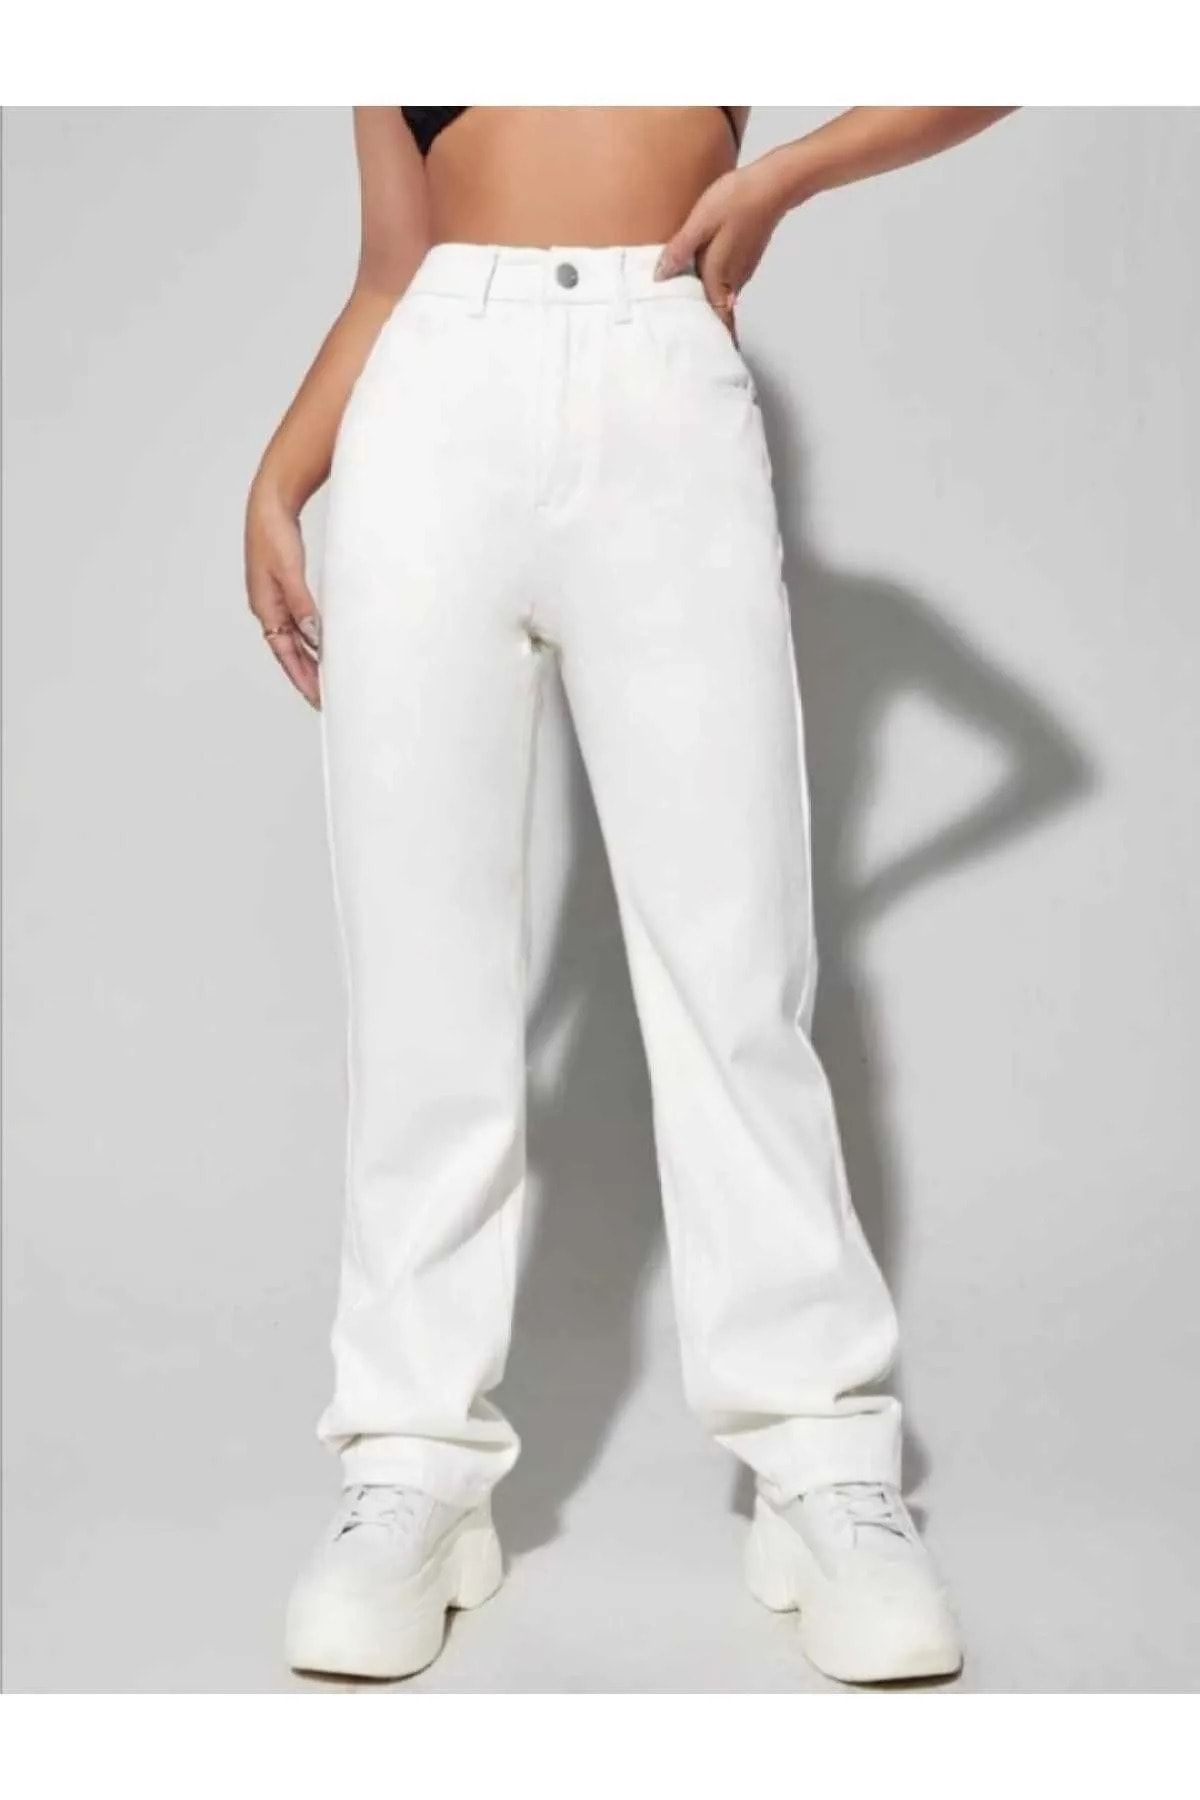 LİMABEL Beyaz Yüksek Bel Salaş Jeans Beyaz Geniş Kot Pantolon %100 Natural Pamuk